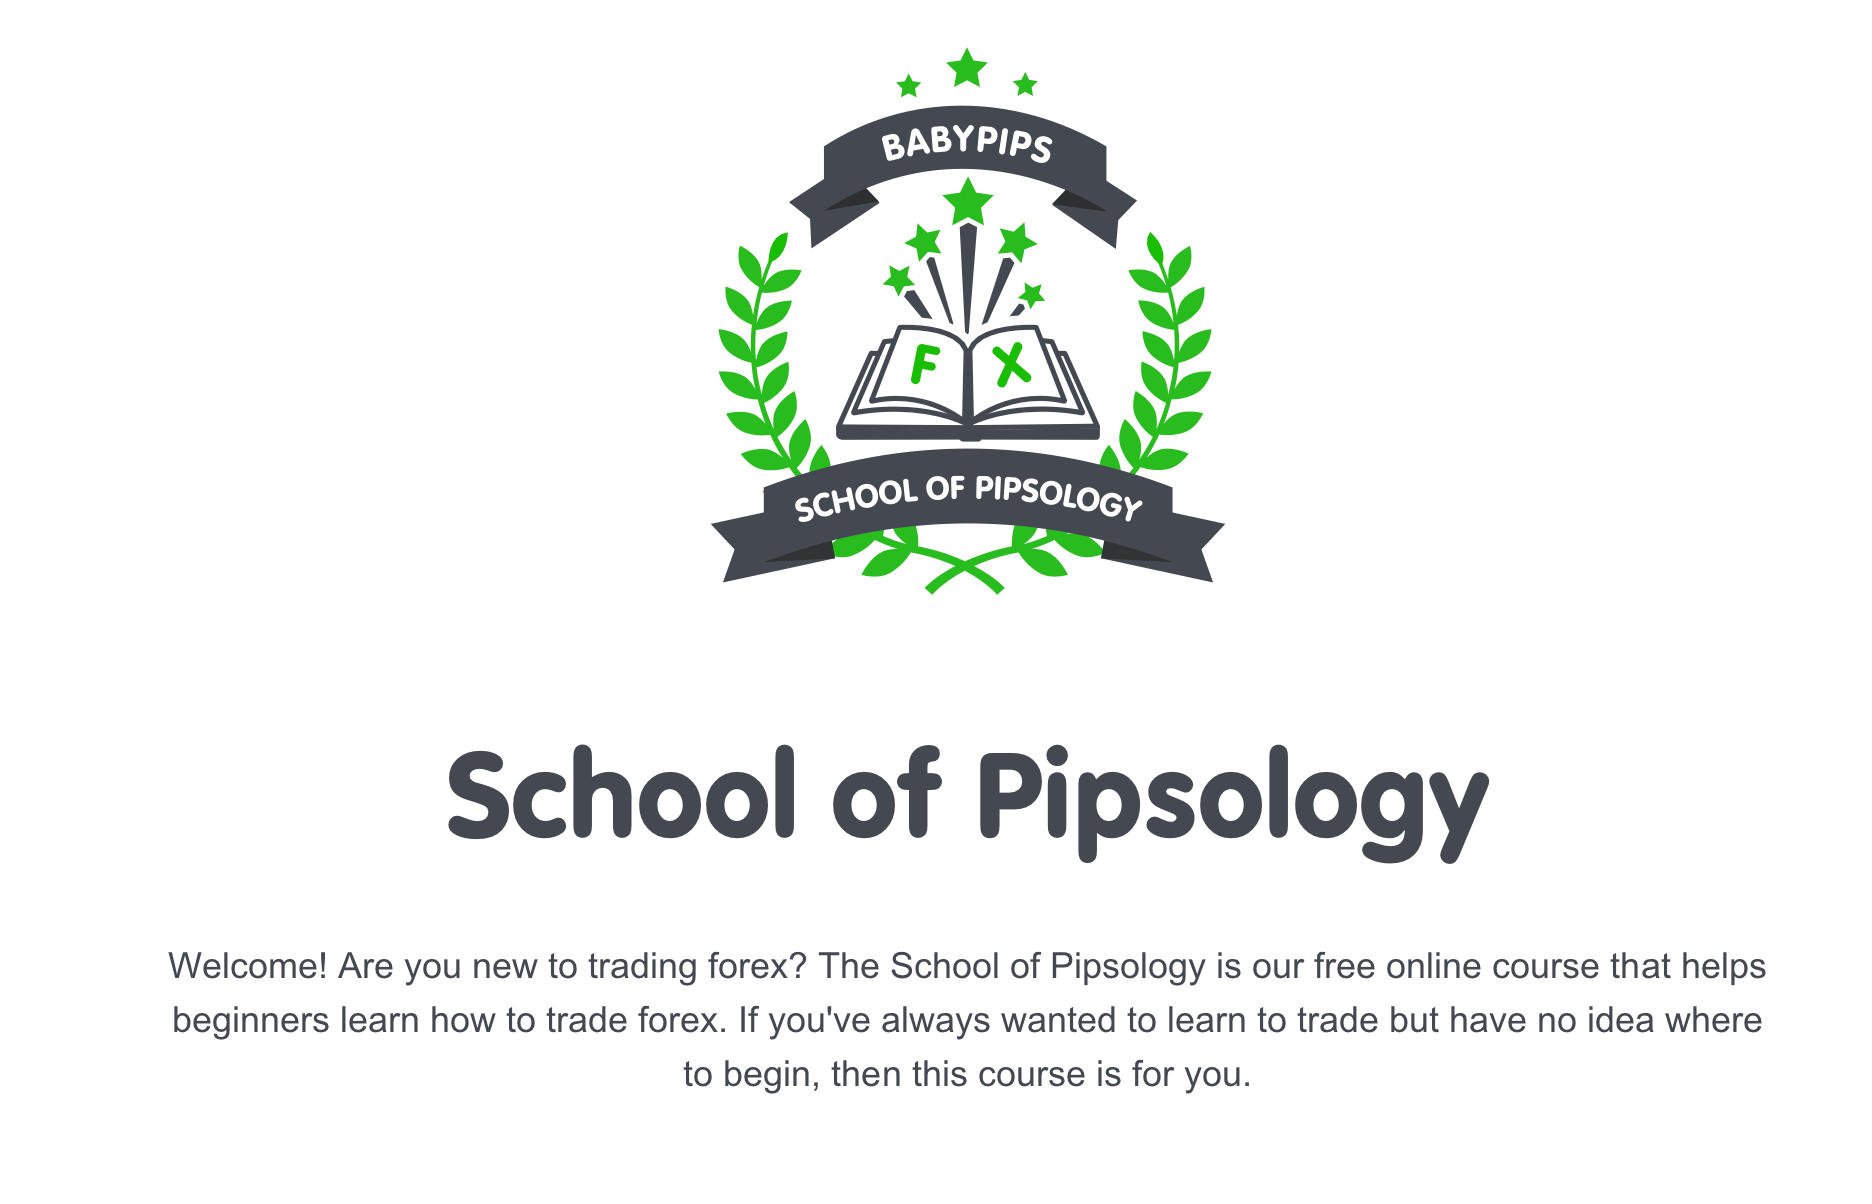 Babypips School of Pipsology